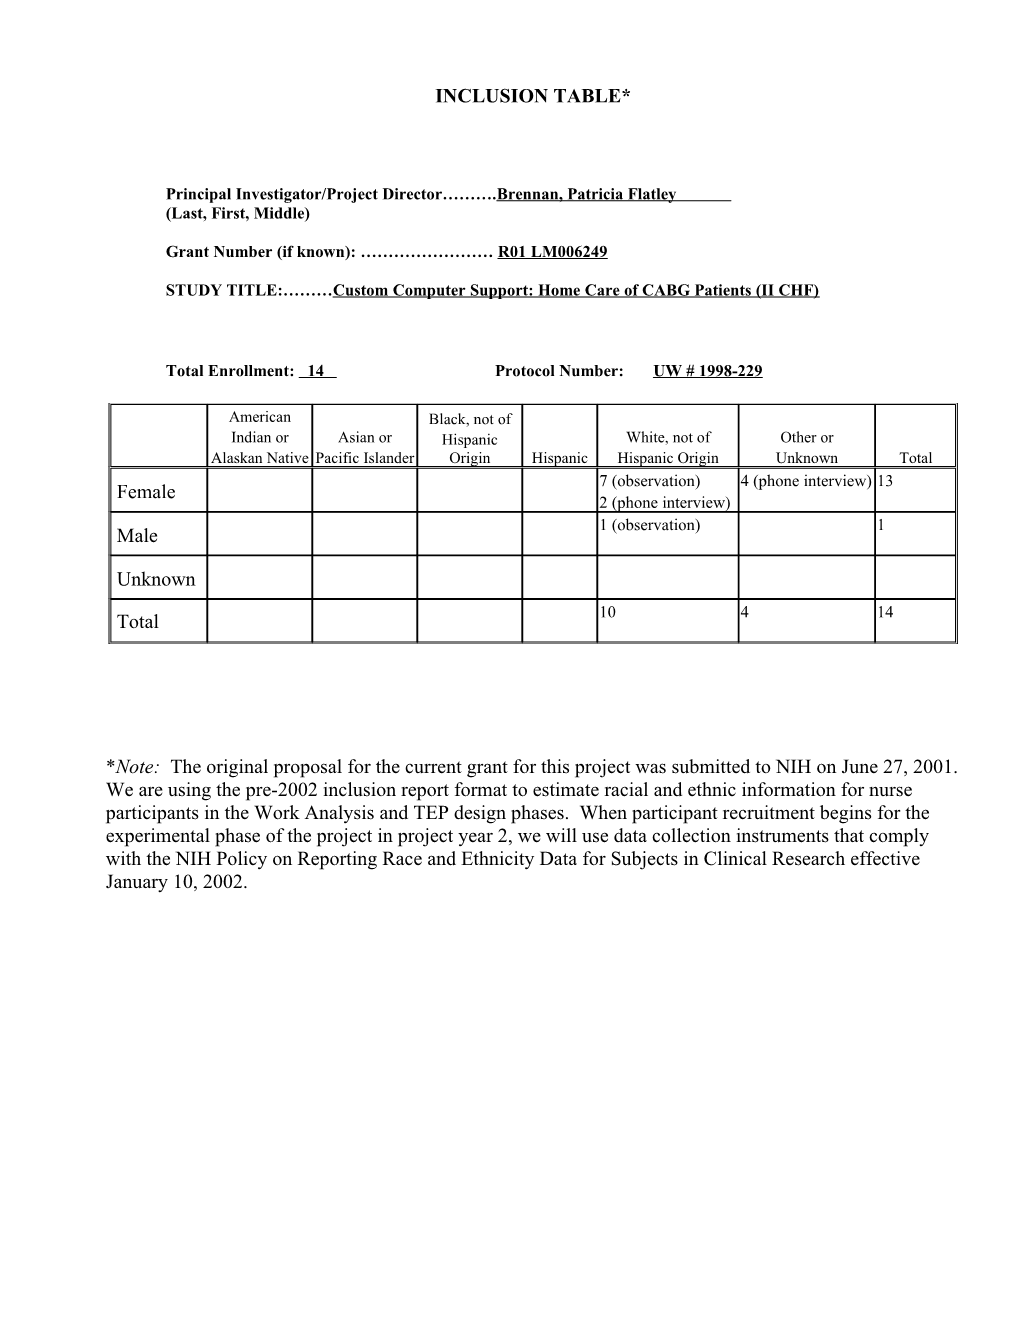 PHS 2590 (Rev. 9/04), Progress Report Summary, Form Page 5